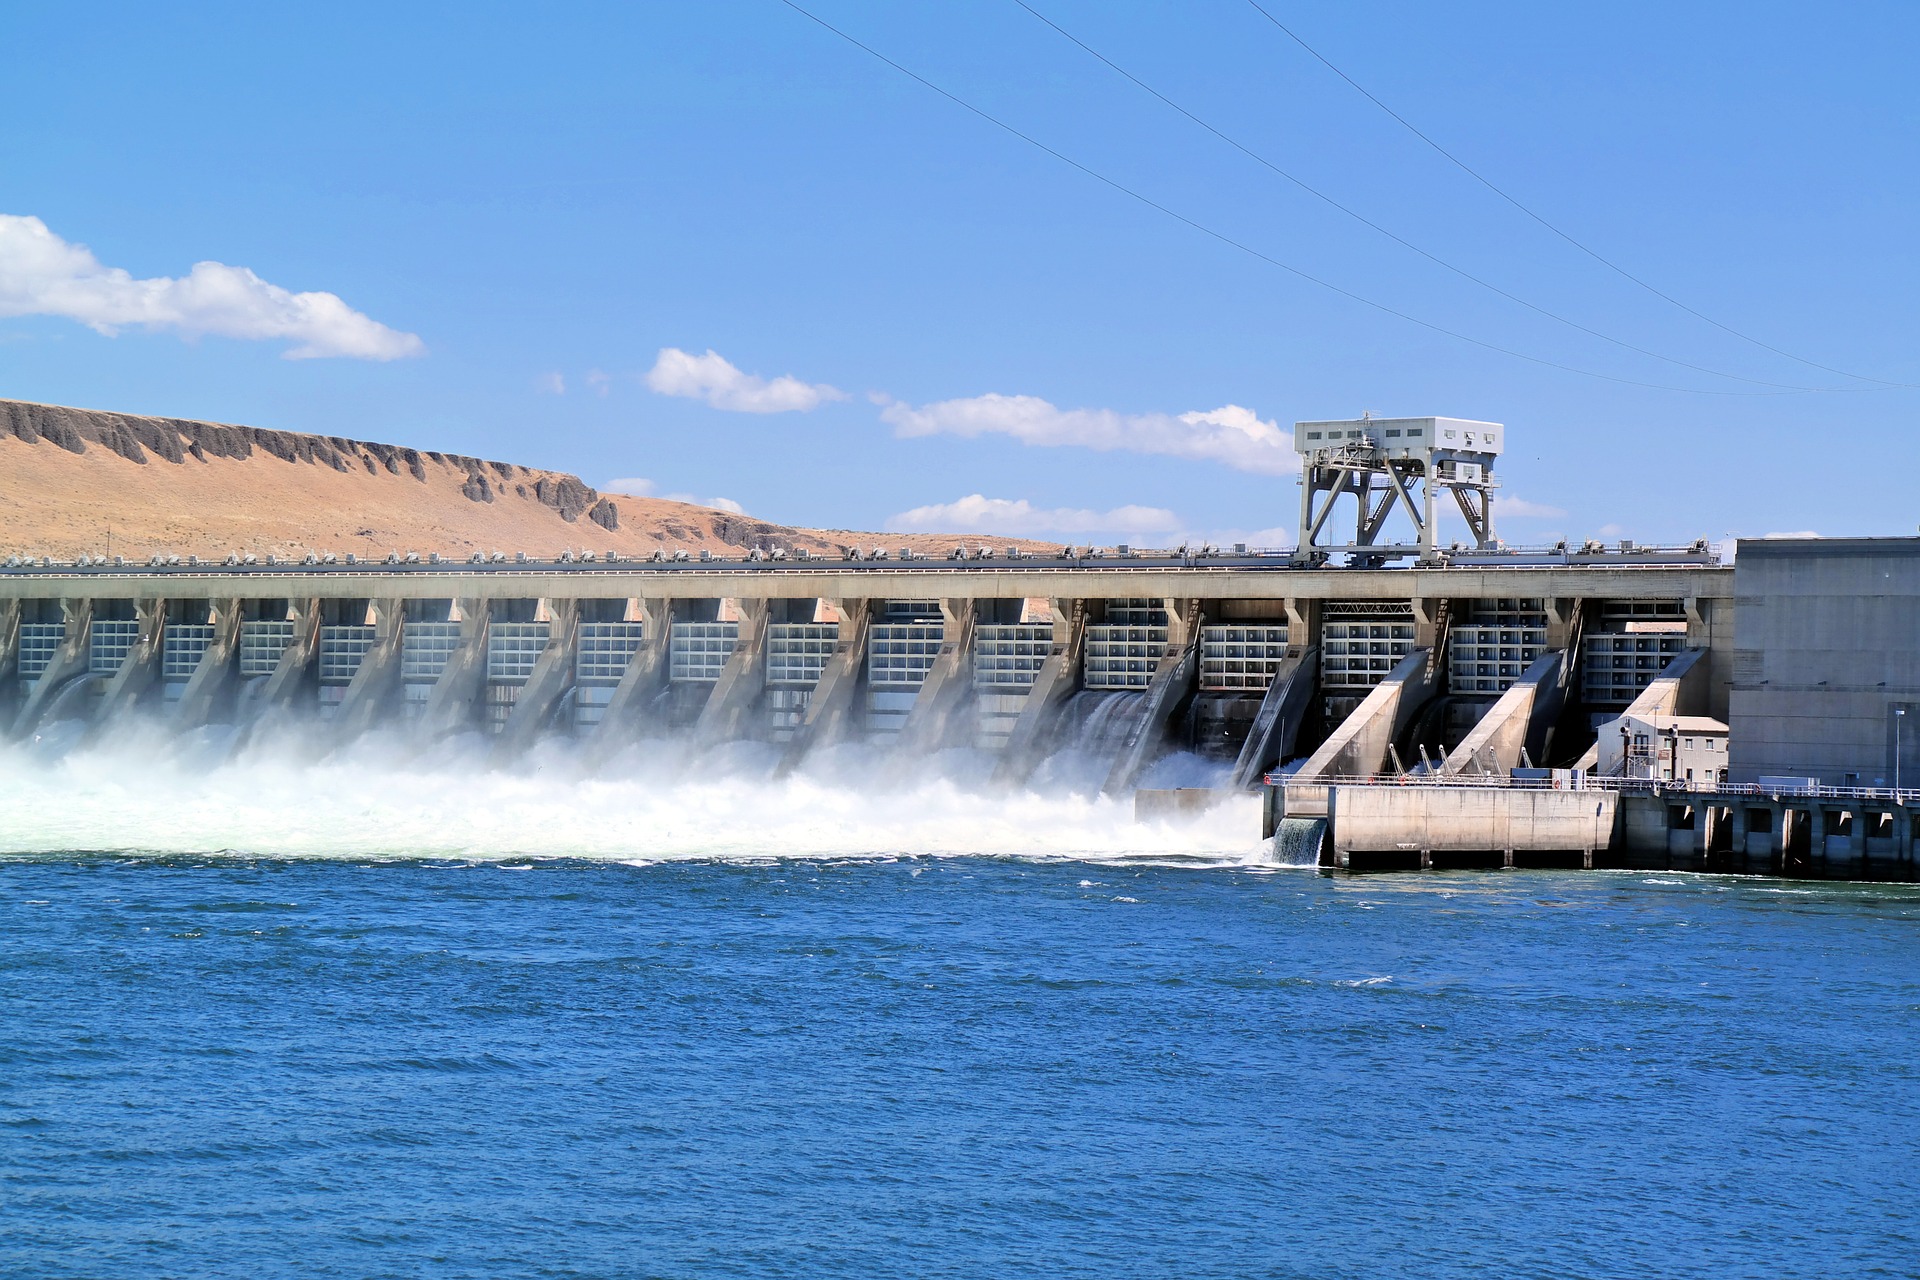 https://pixabay.com/photos/dam-river-water-landscape-power-929406/